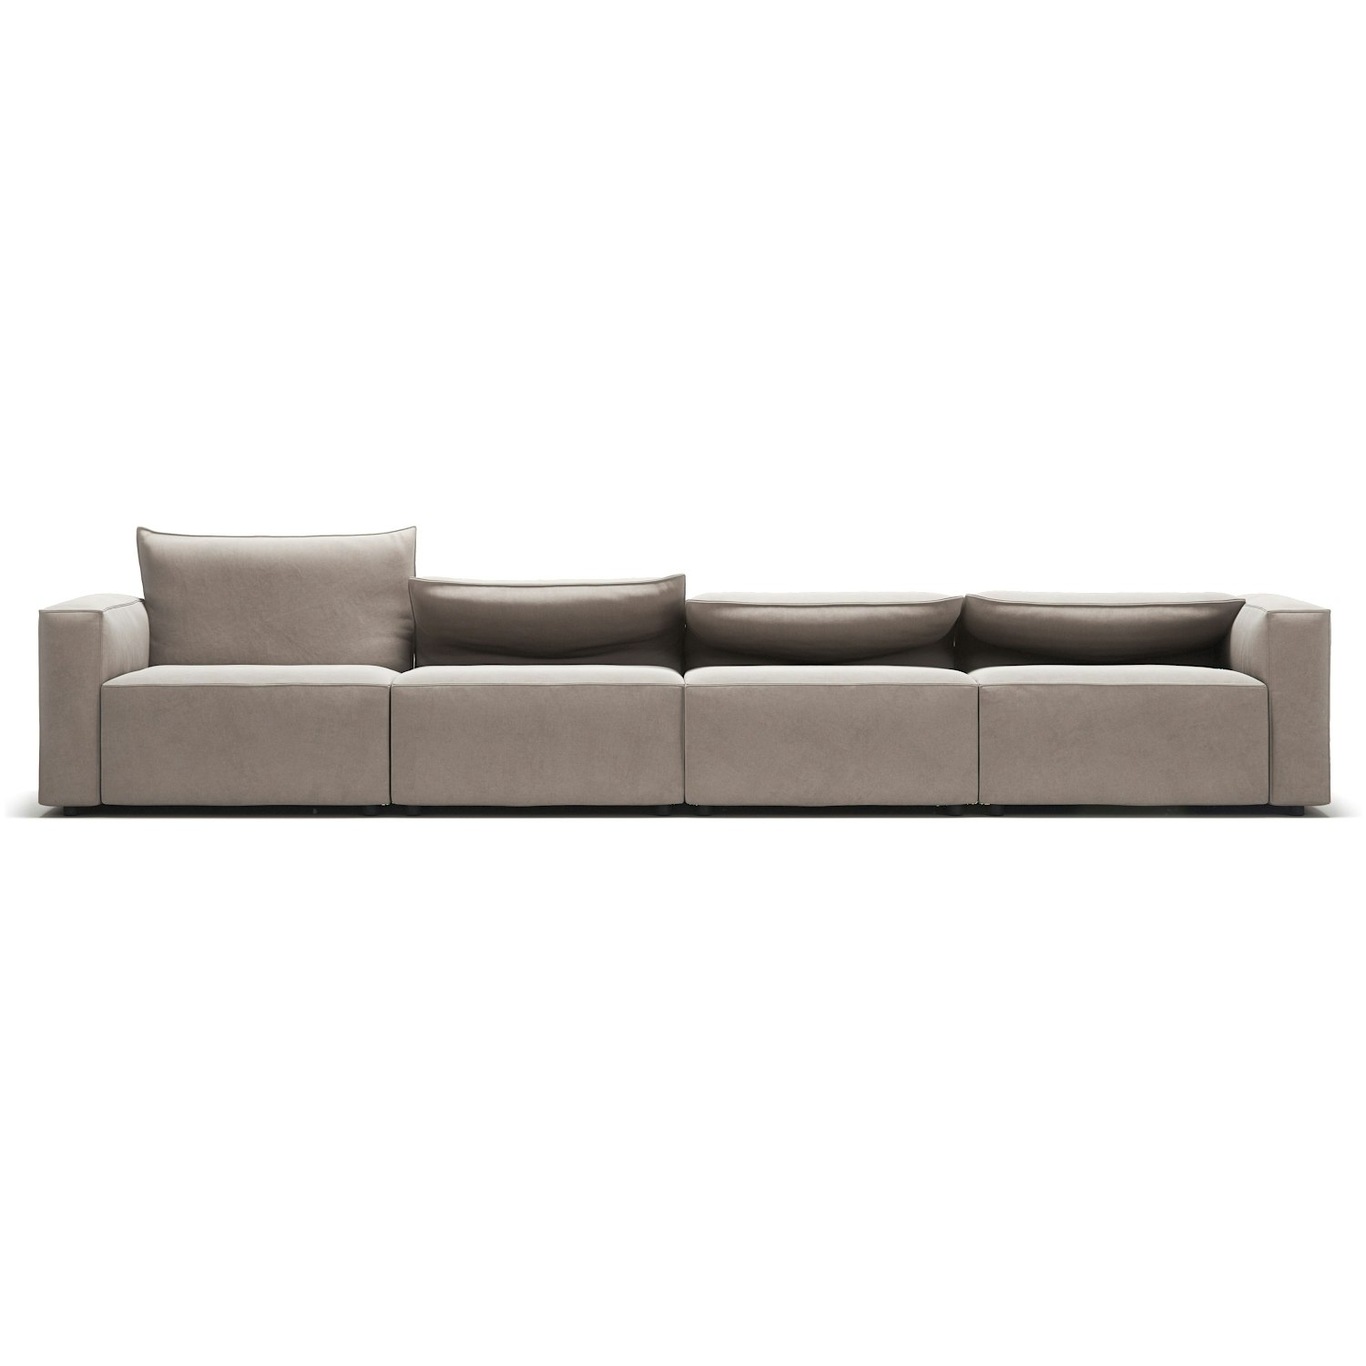 Moore 4-Seater Sofa, Sandshell Beige